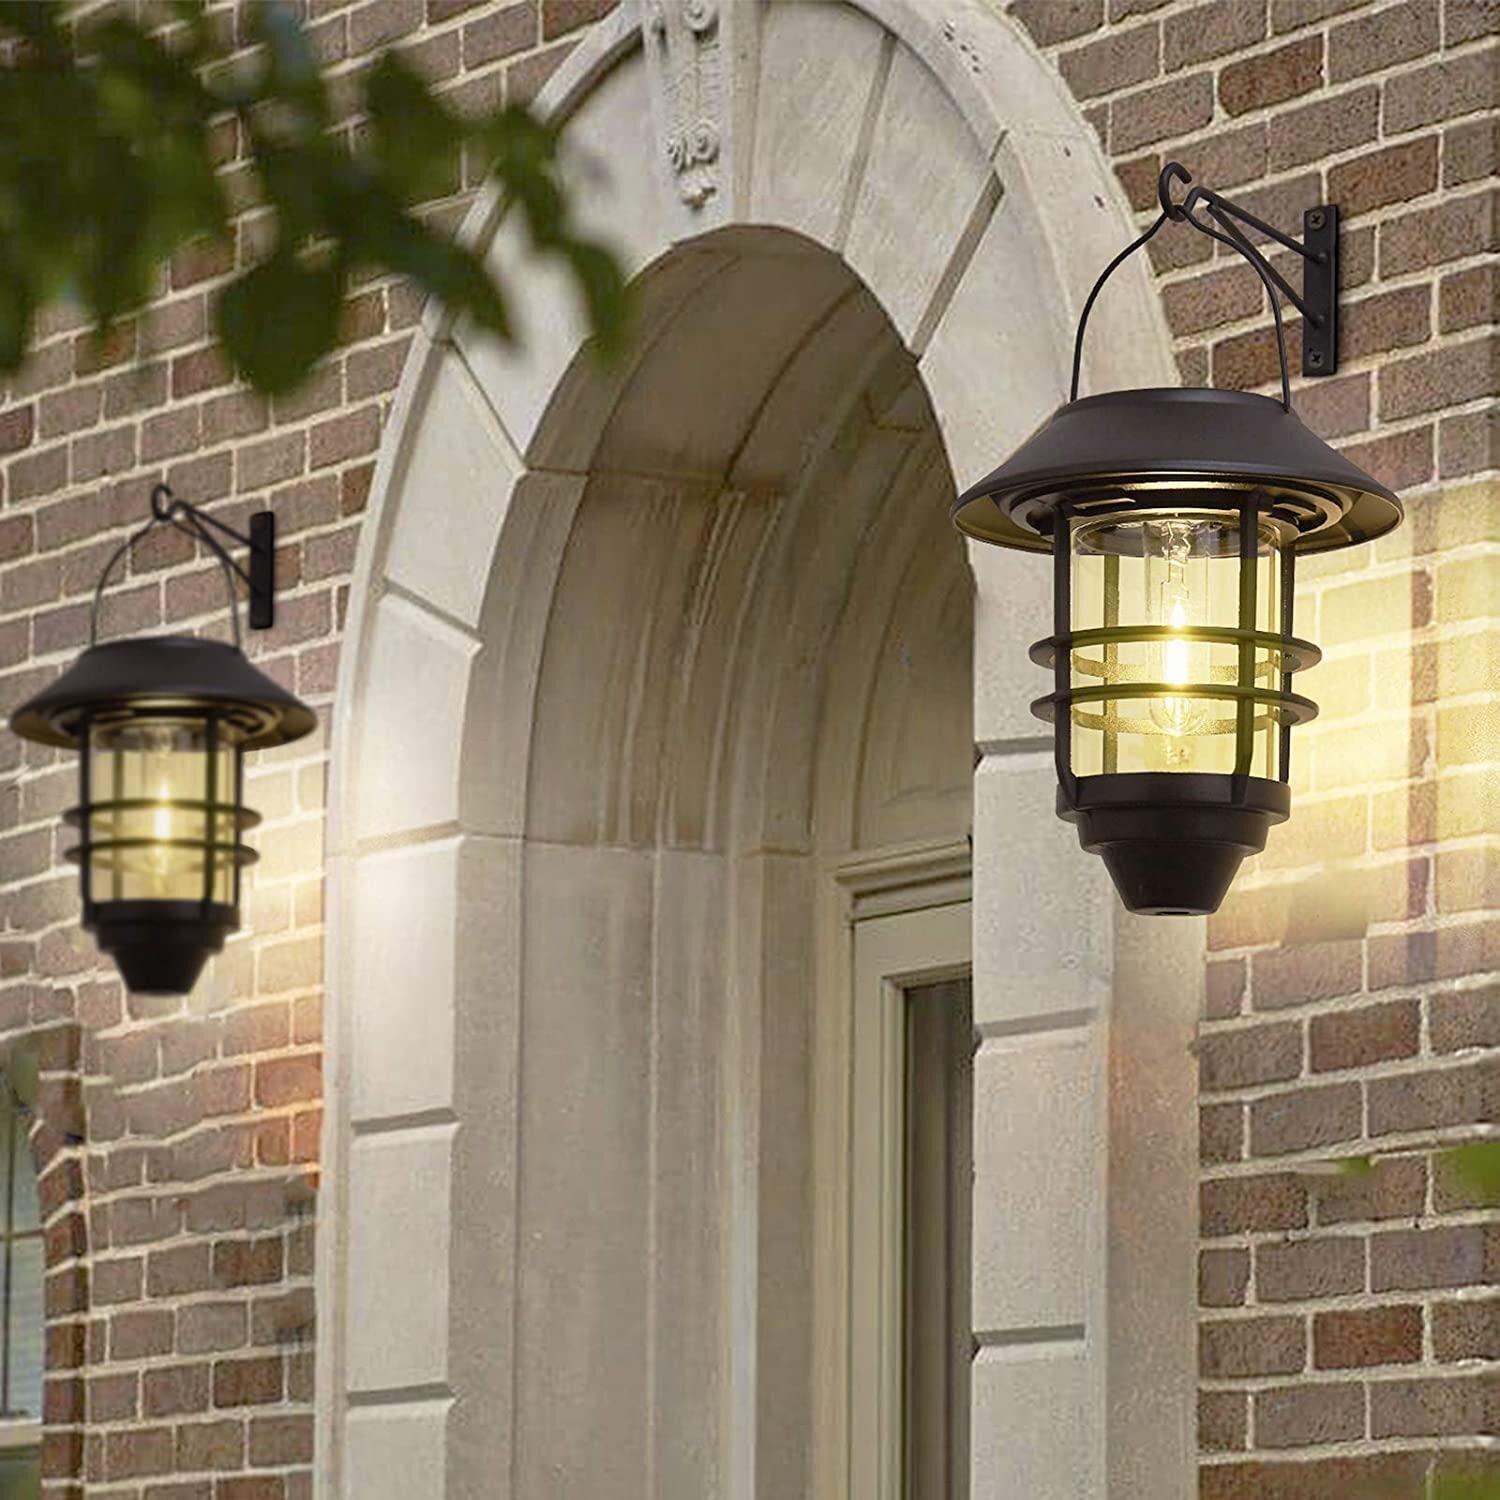 Solar Powered LED Outdoor Hallway Wall Light Automatic Porch Lamp Lantern